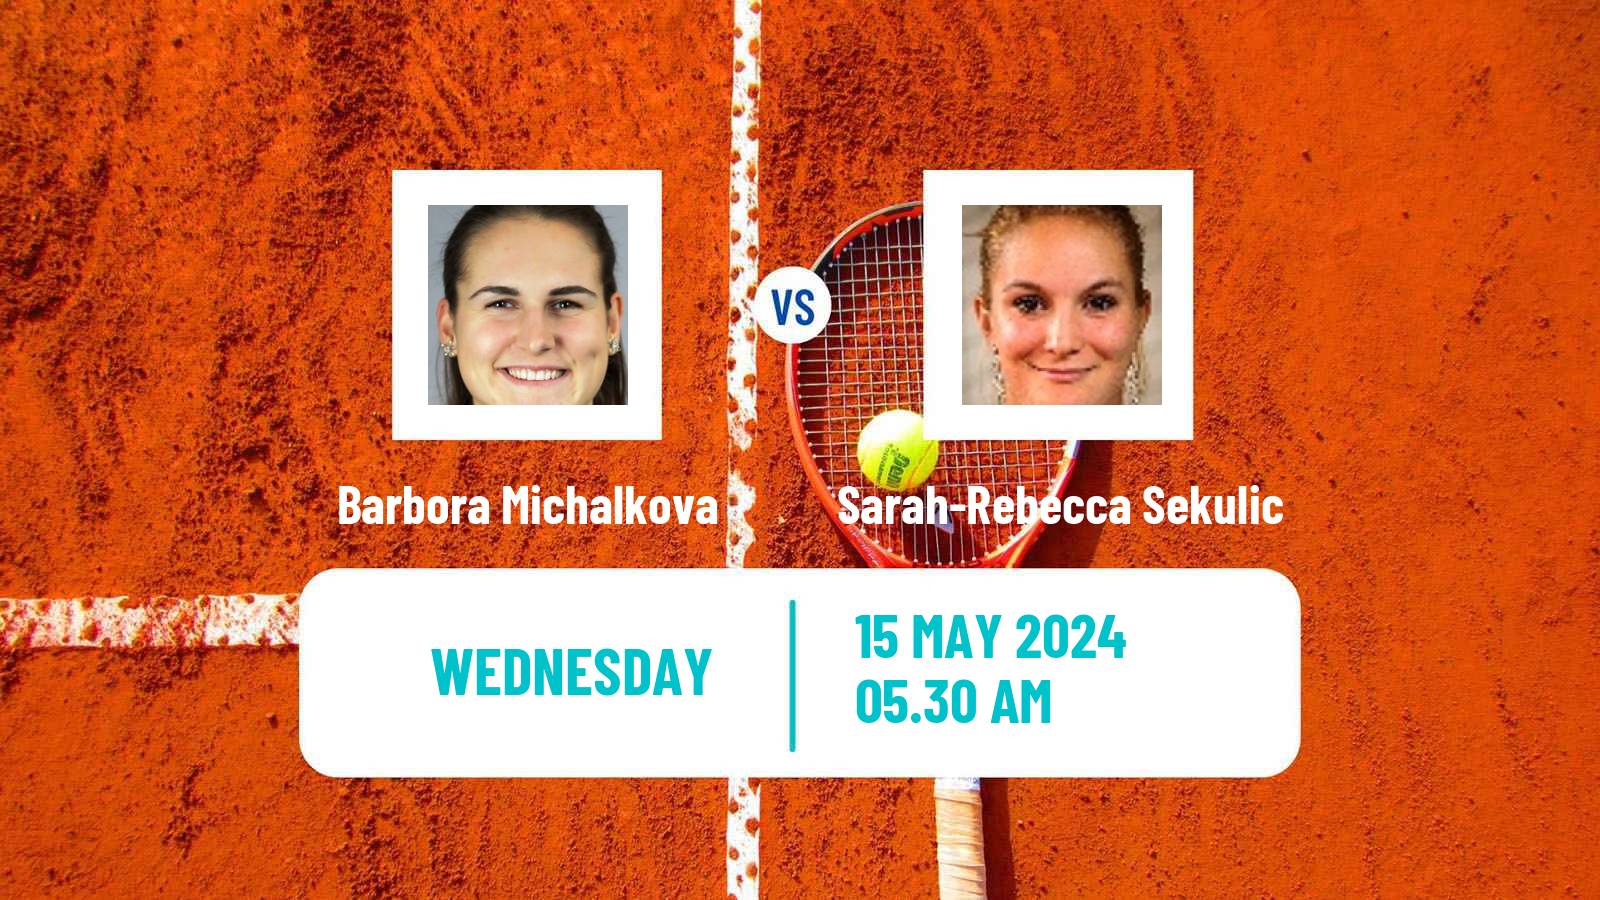 Tennis ITF W15 Kranjska Gora Women Barbora Michalkova - Sarah-Rebecca Sekulic